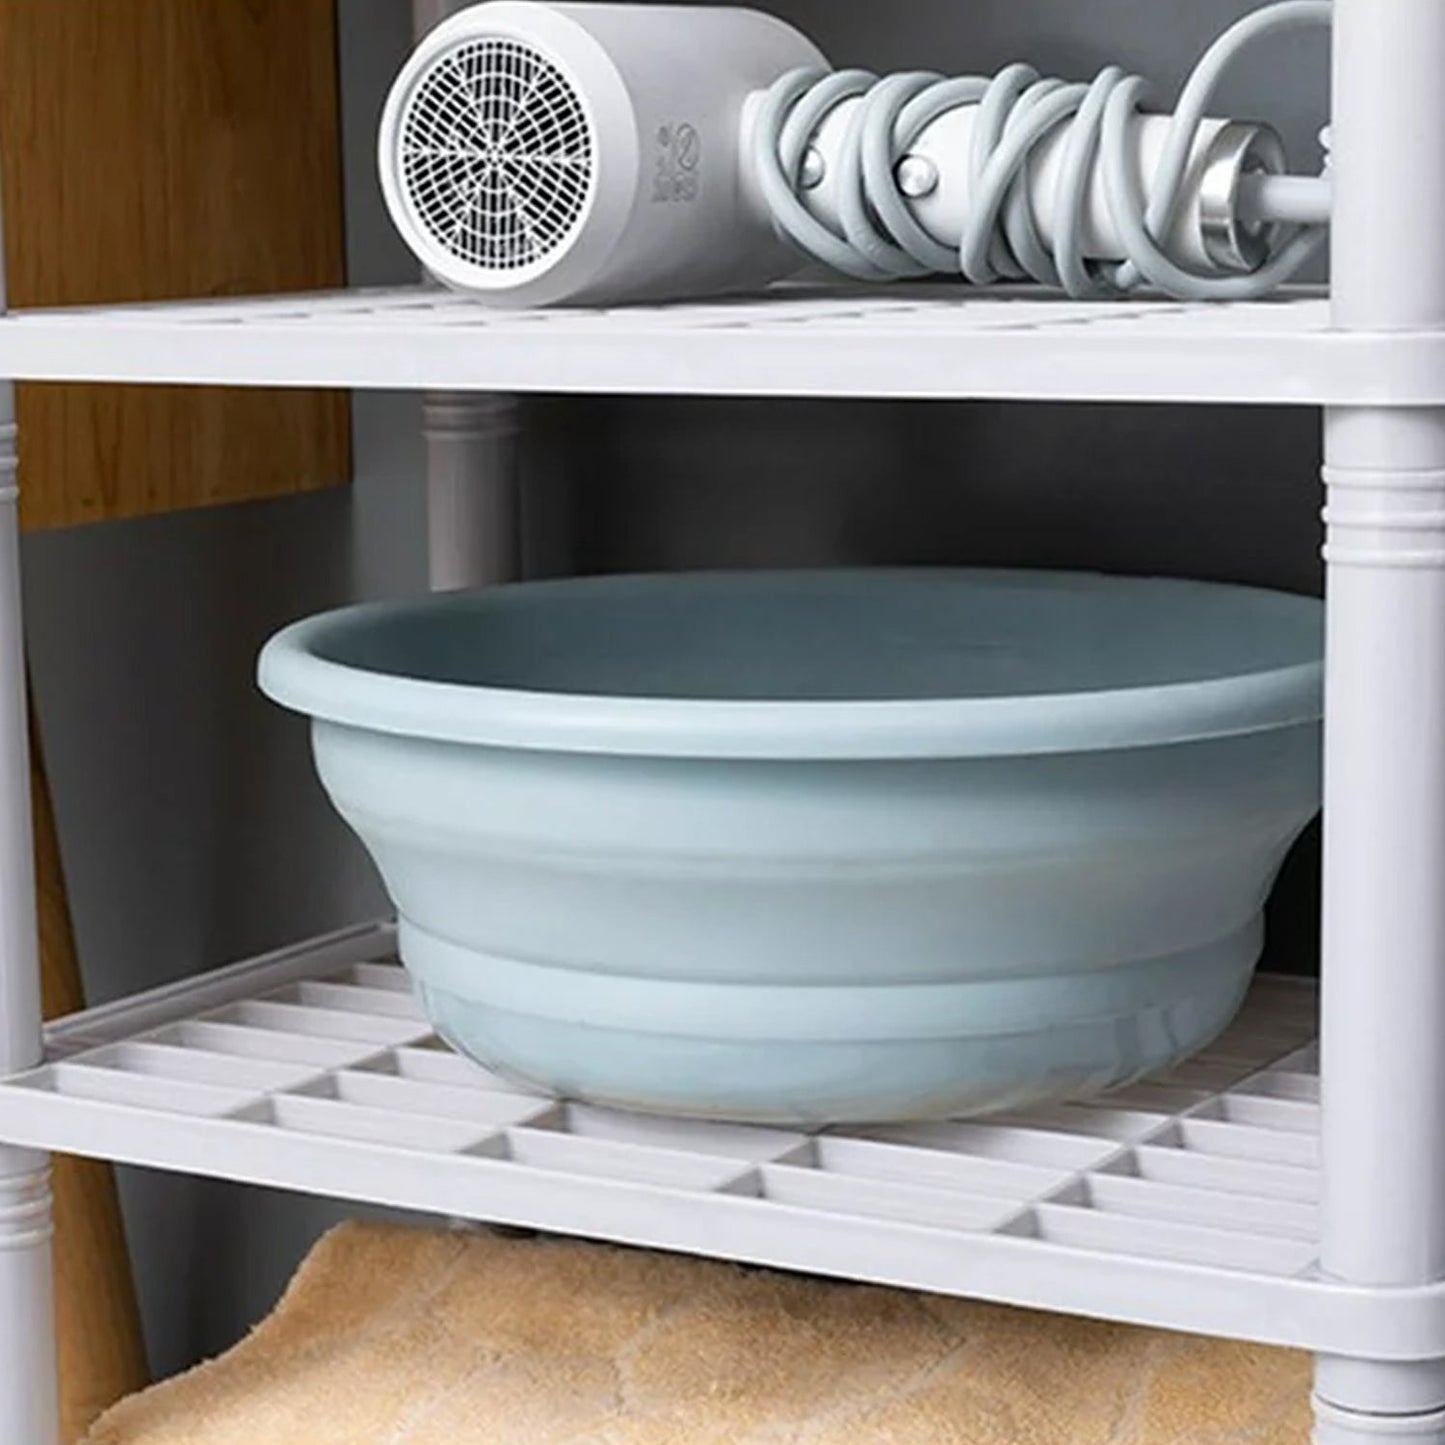 4089 4 Layer Multifunctional Storage Shelf Organizer Narrow Storage Rack for Kitchen or Bathroom